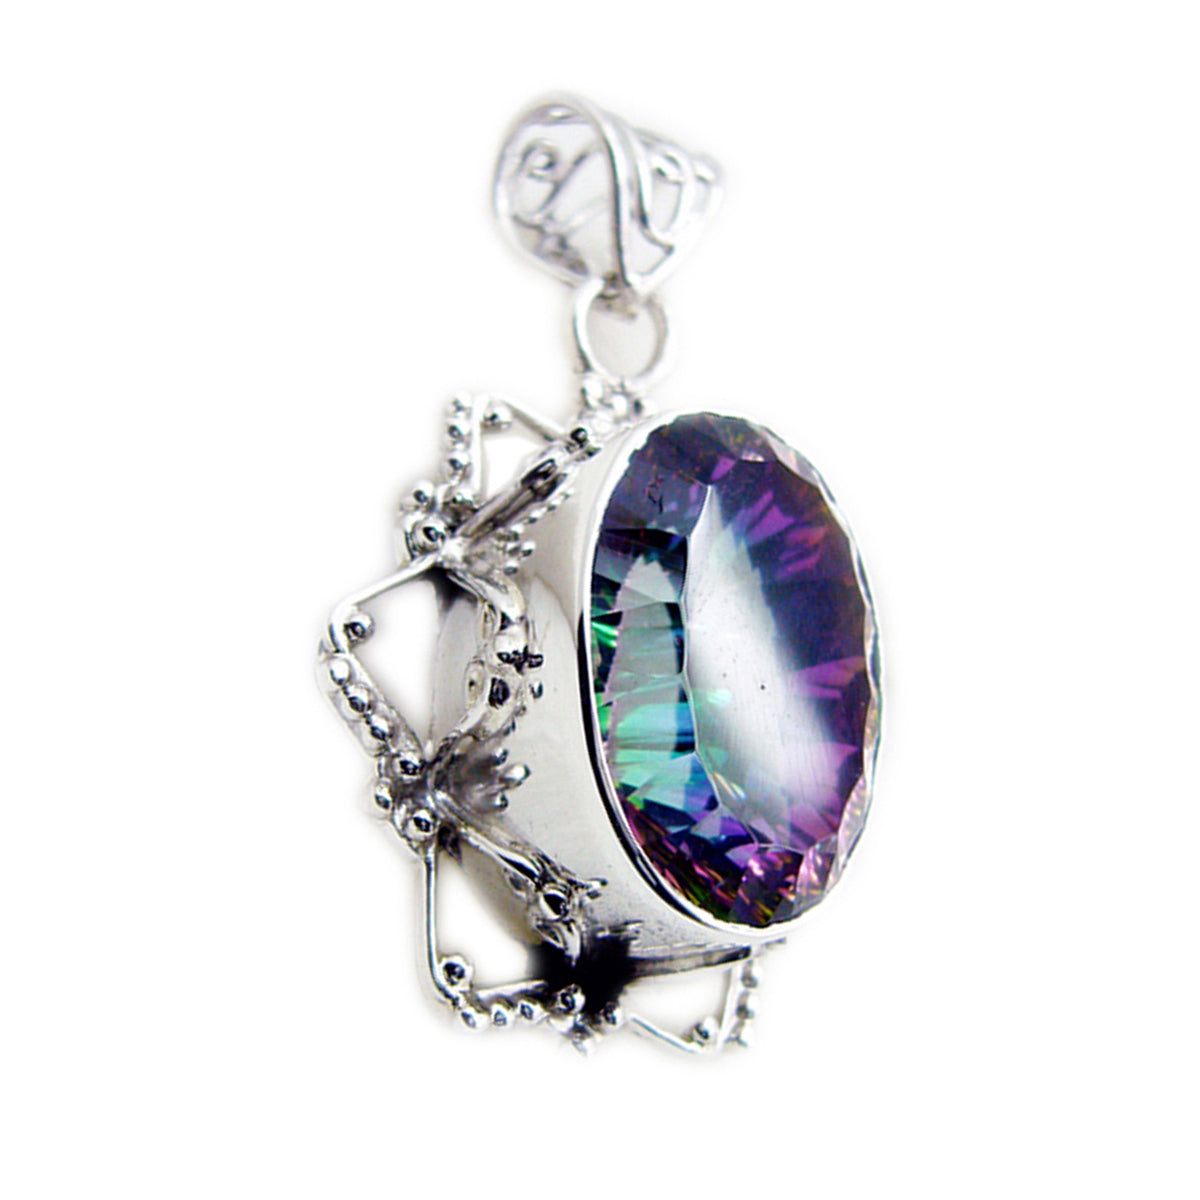 Riyo Pretty Gemstone Oval Faceted Multi Color Mystic Quartz Sterling Silver Pendant Gift For Friend